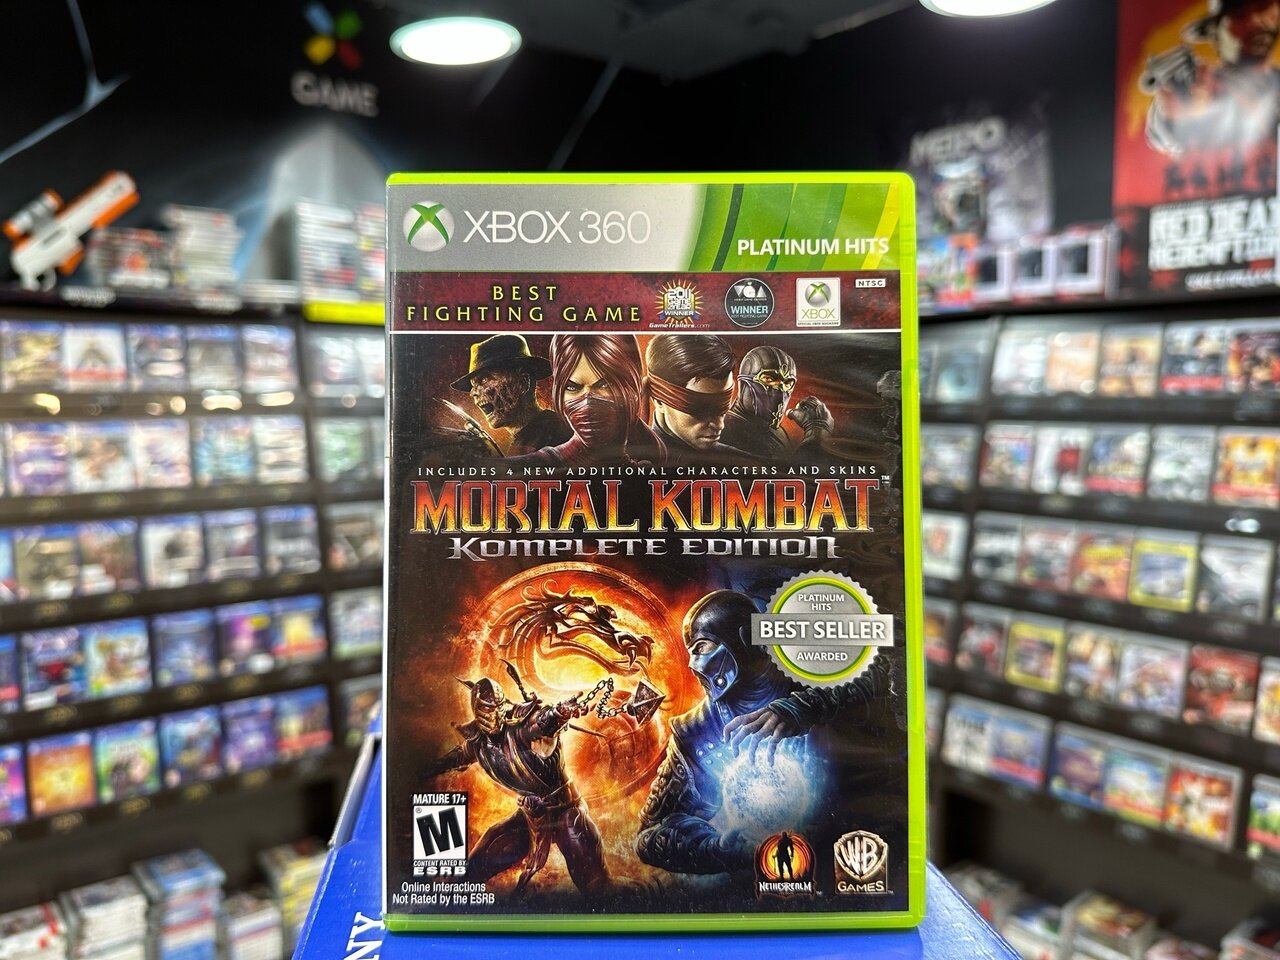 Игра Mortal Kombat Komplete Edition (Xbox 360)